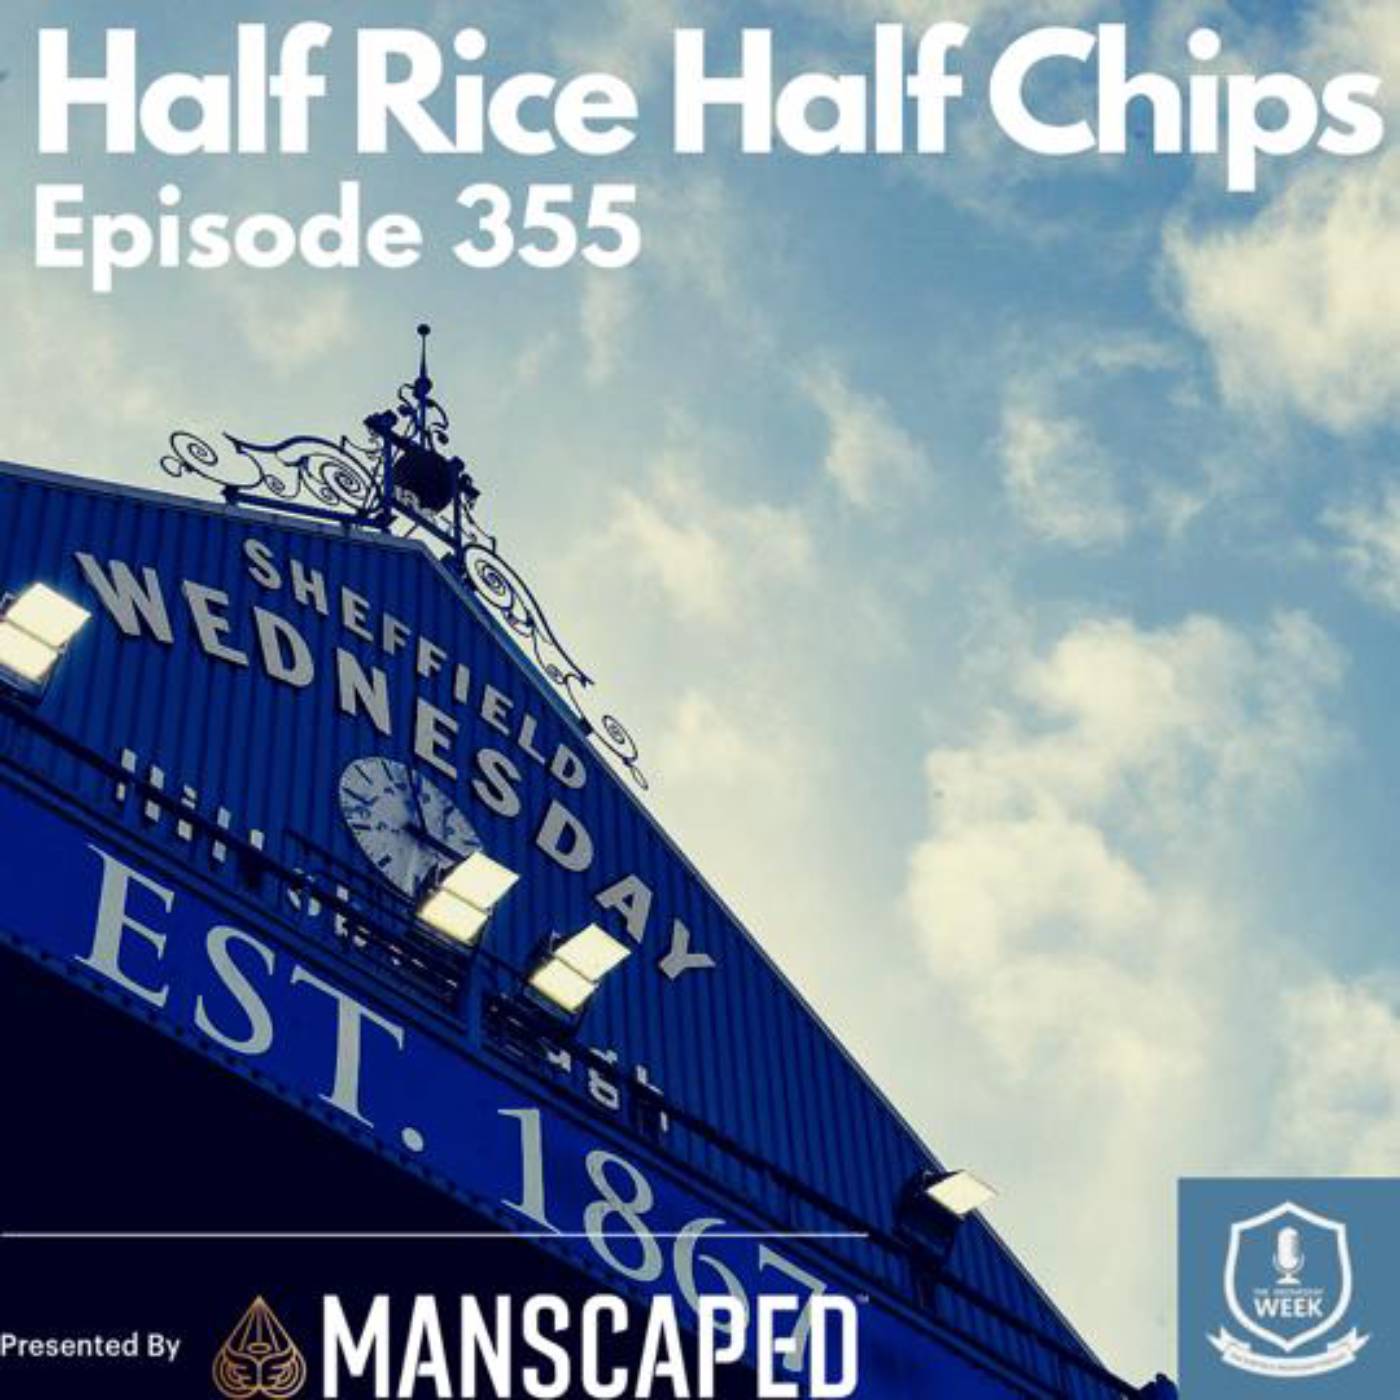 Half Rice, Half chips